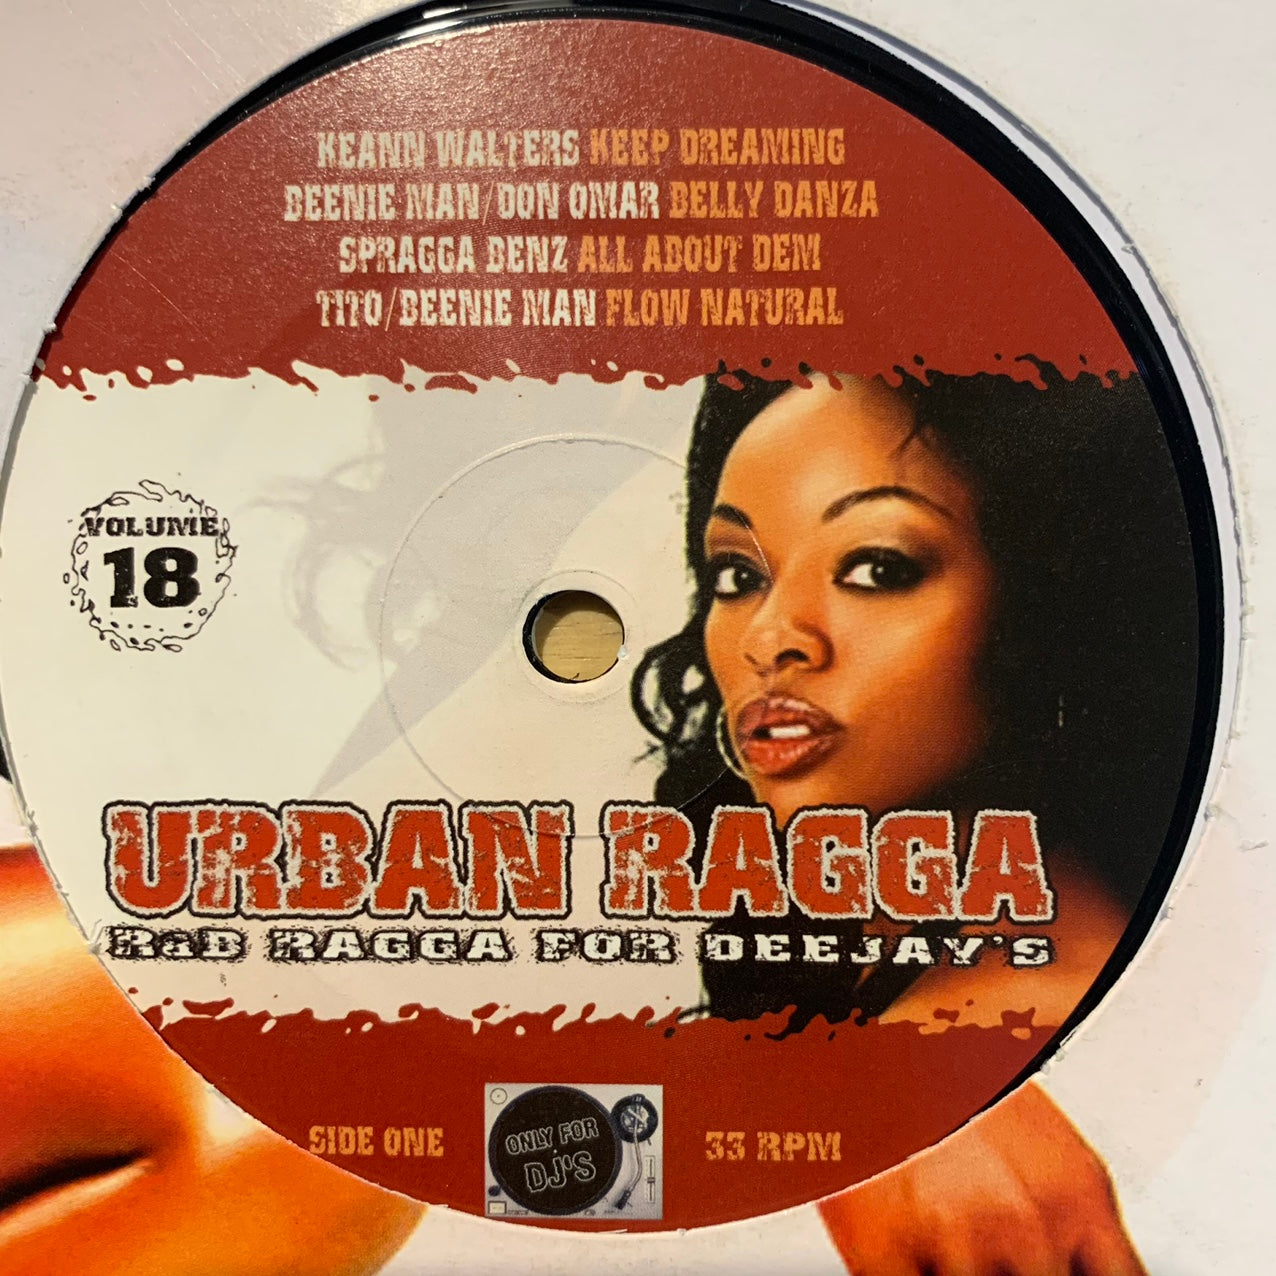 Urban Ragga Vol 18, 8 Track Ragga 12” Album Featuring Spragga Benz, Beenie Man, Tito, T.O.K